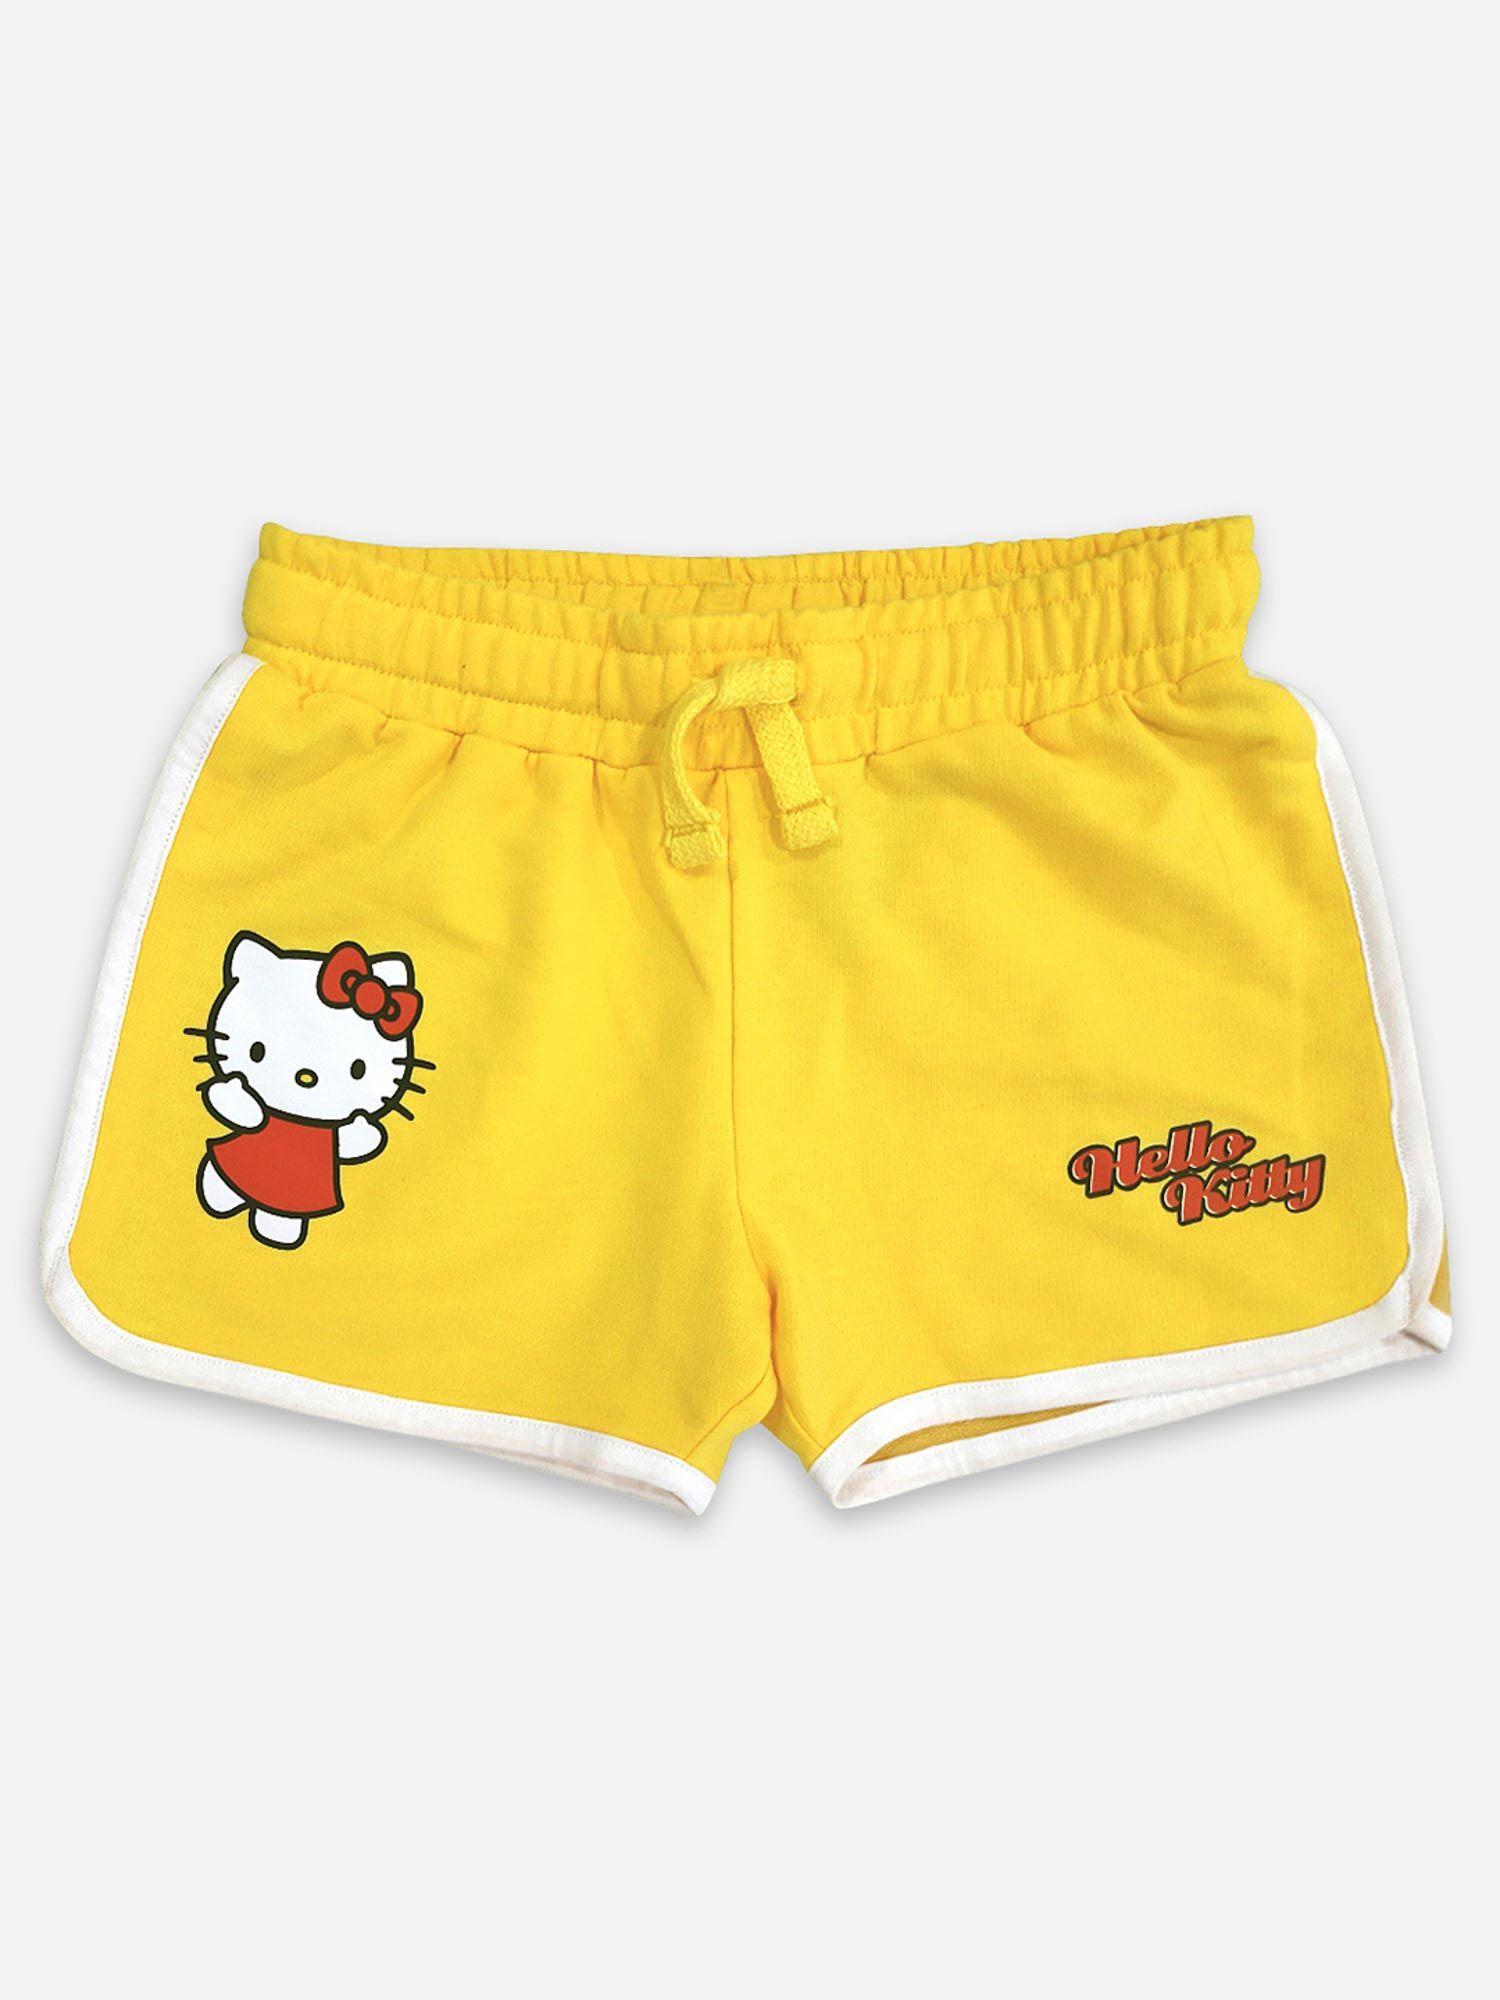 hello kitty bright yellow shorts for kids girls